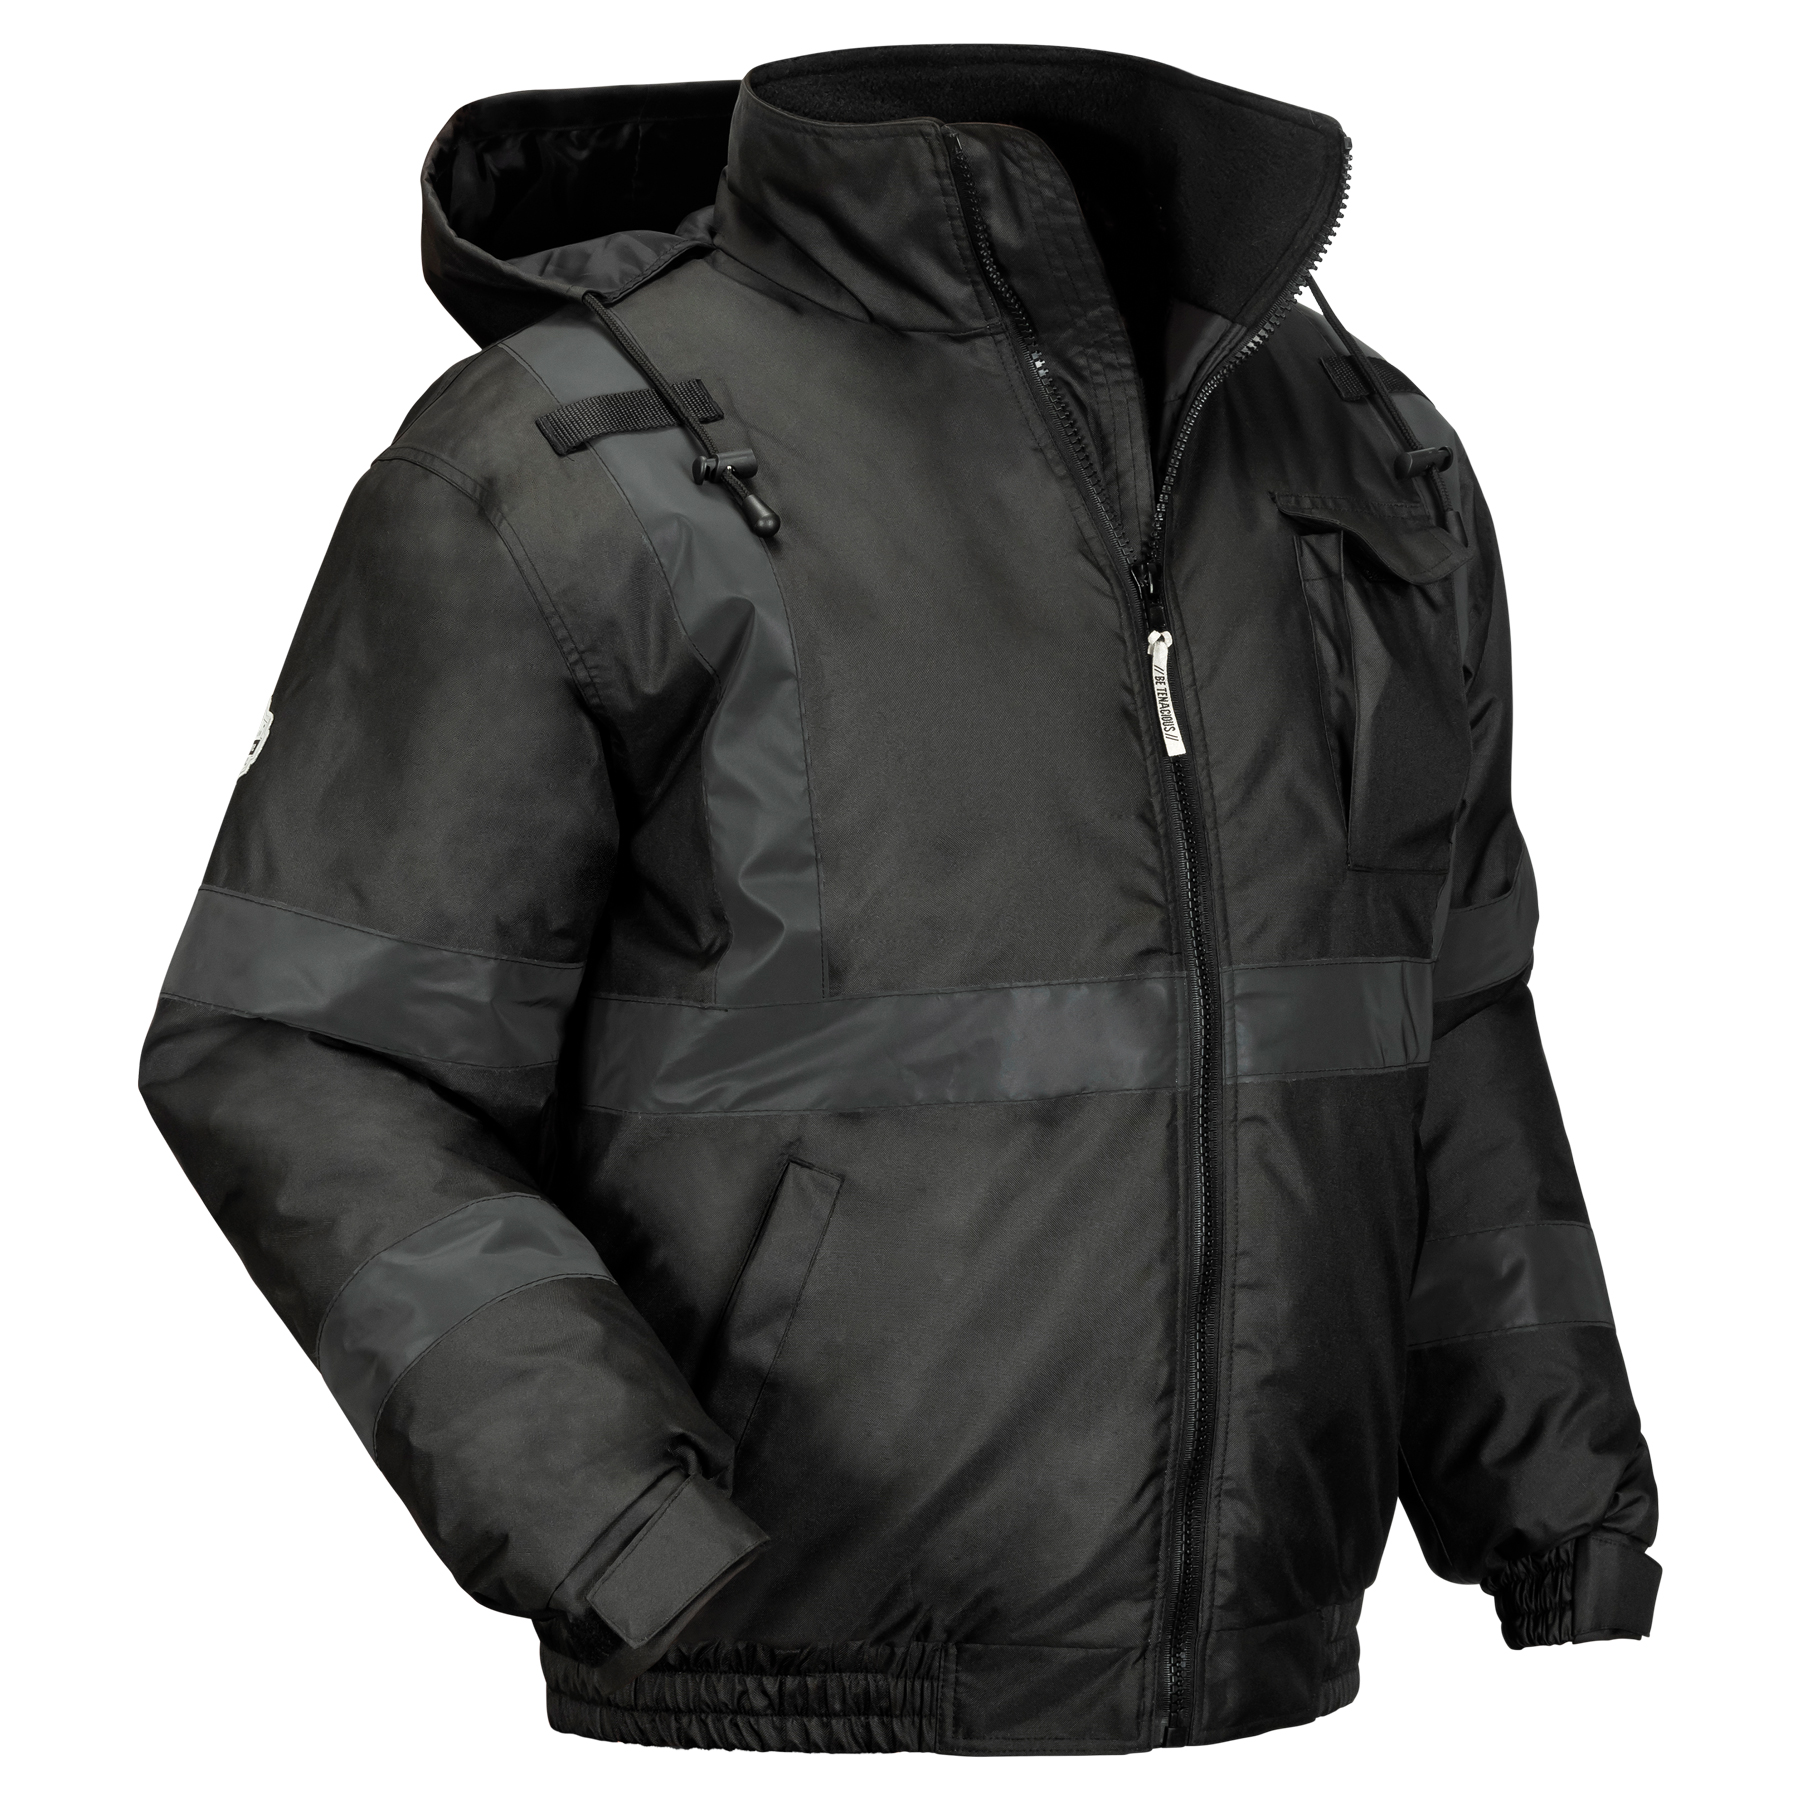 ANSI Compliant Ergodyne GloWear 8379 High Visibility Reflective Winter Bomber Jacket Zip Out Fleece Liner